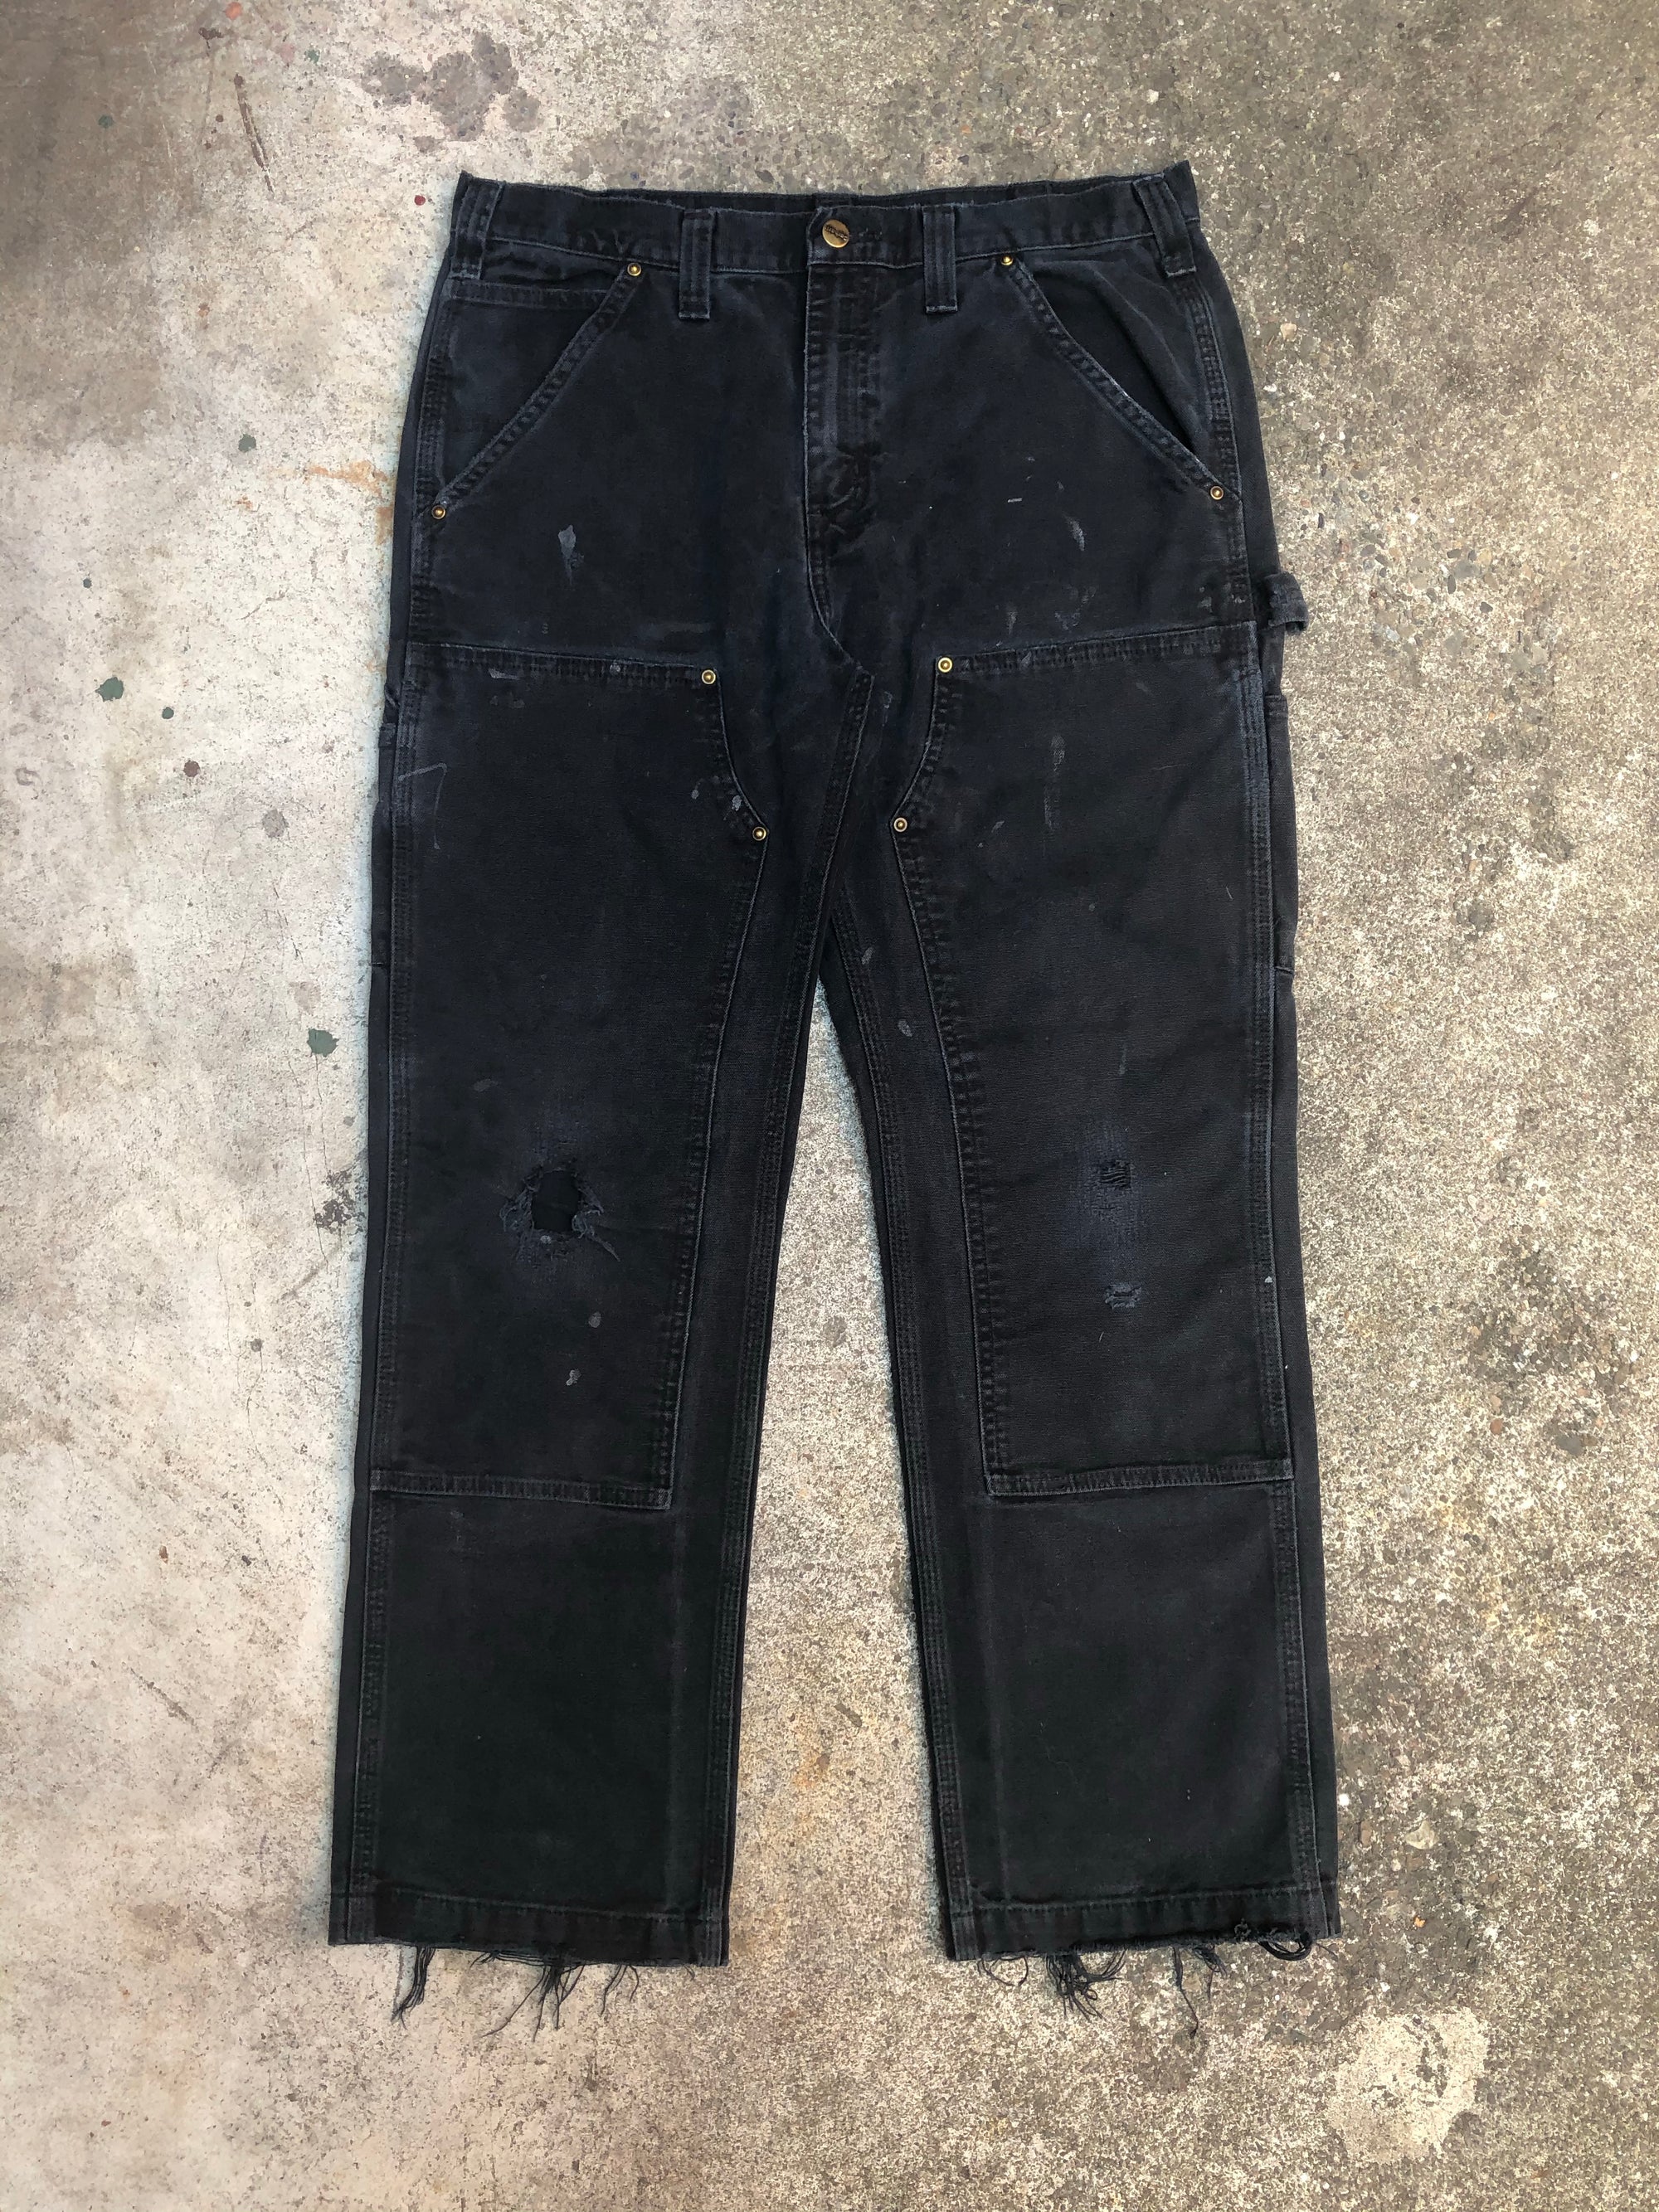 Carhartt 100098-001 Black Double Front Knee Painter Pants (34X29)